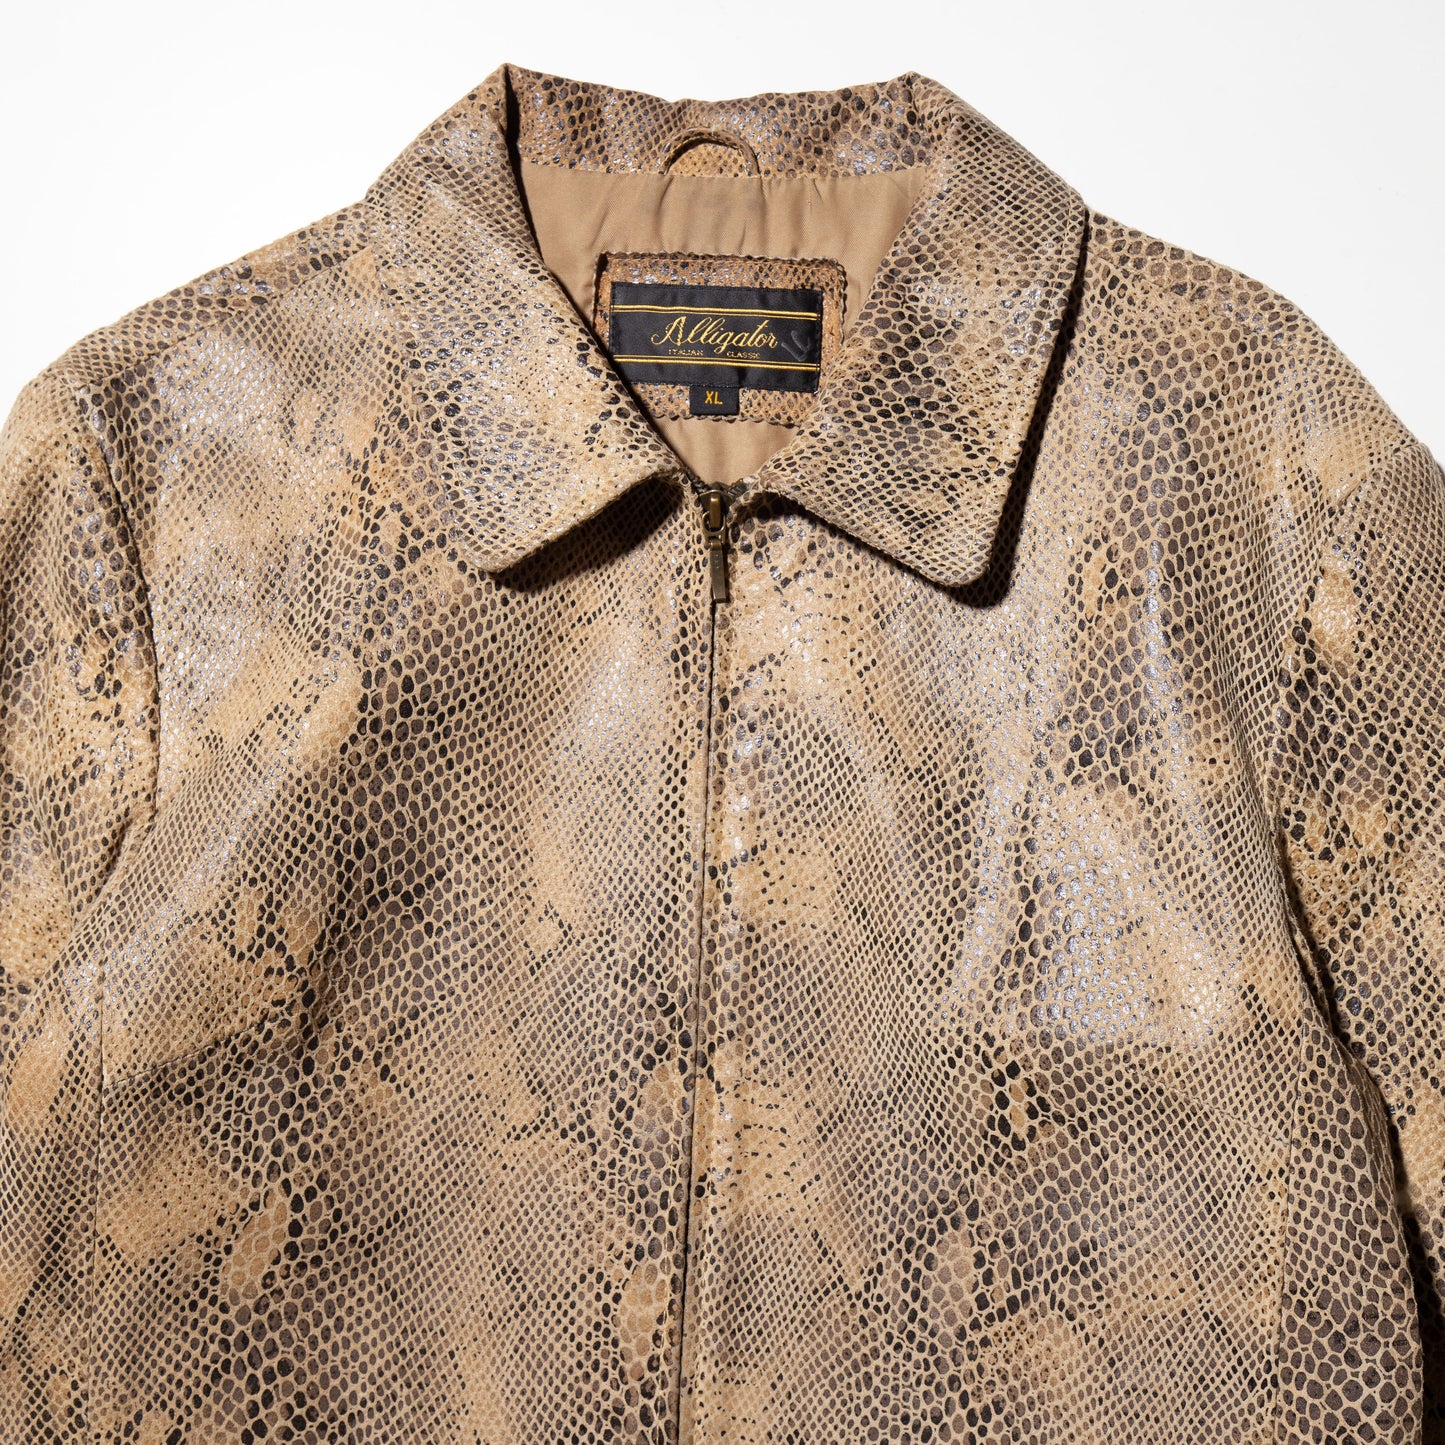 vintage python pattern leather jacket